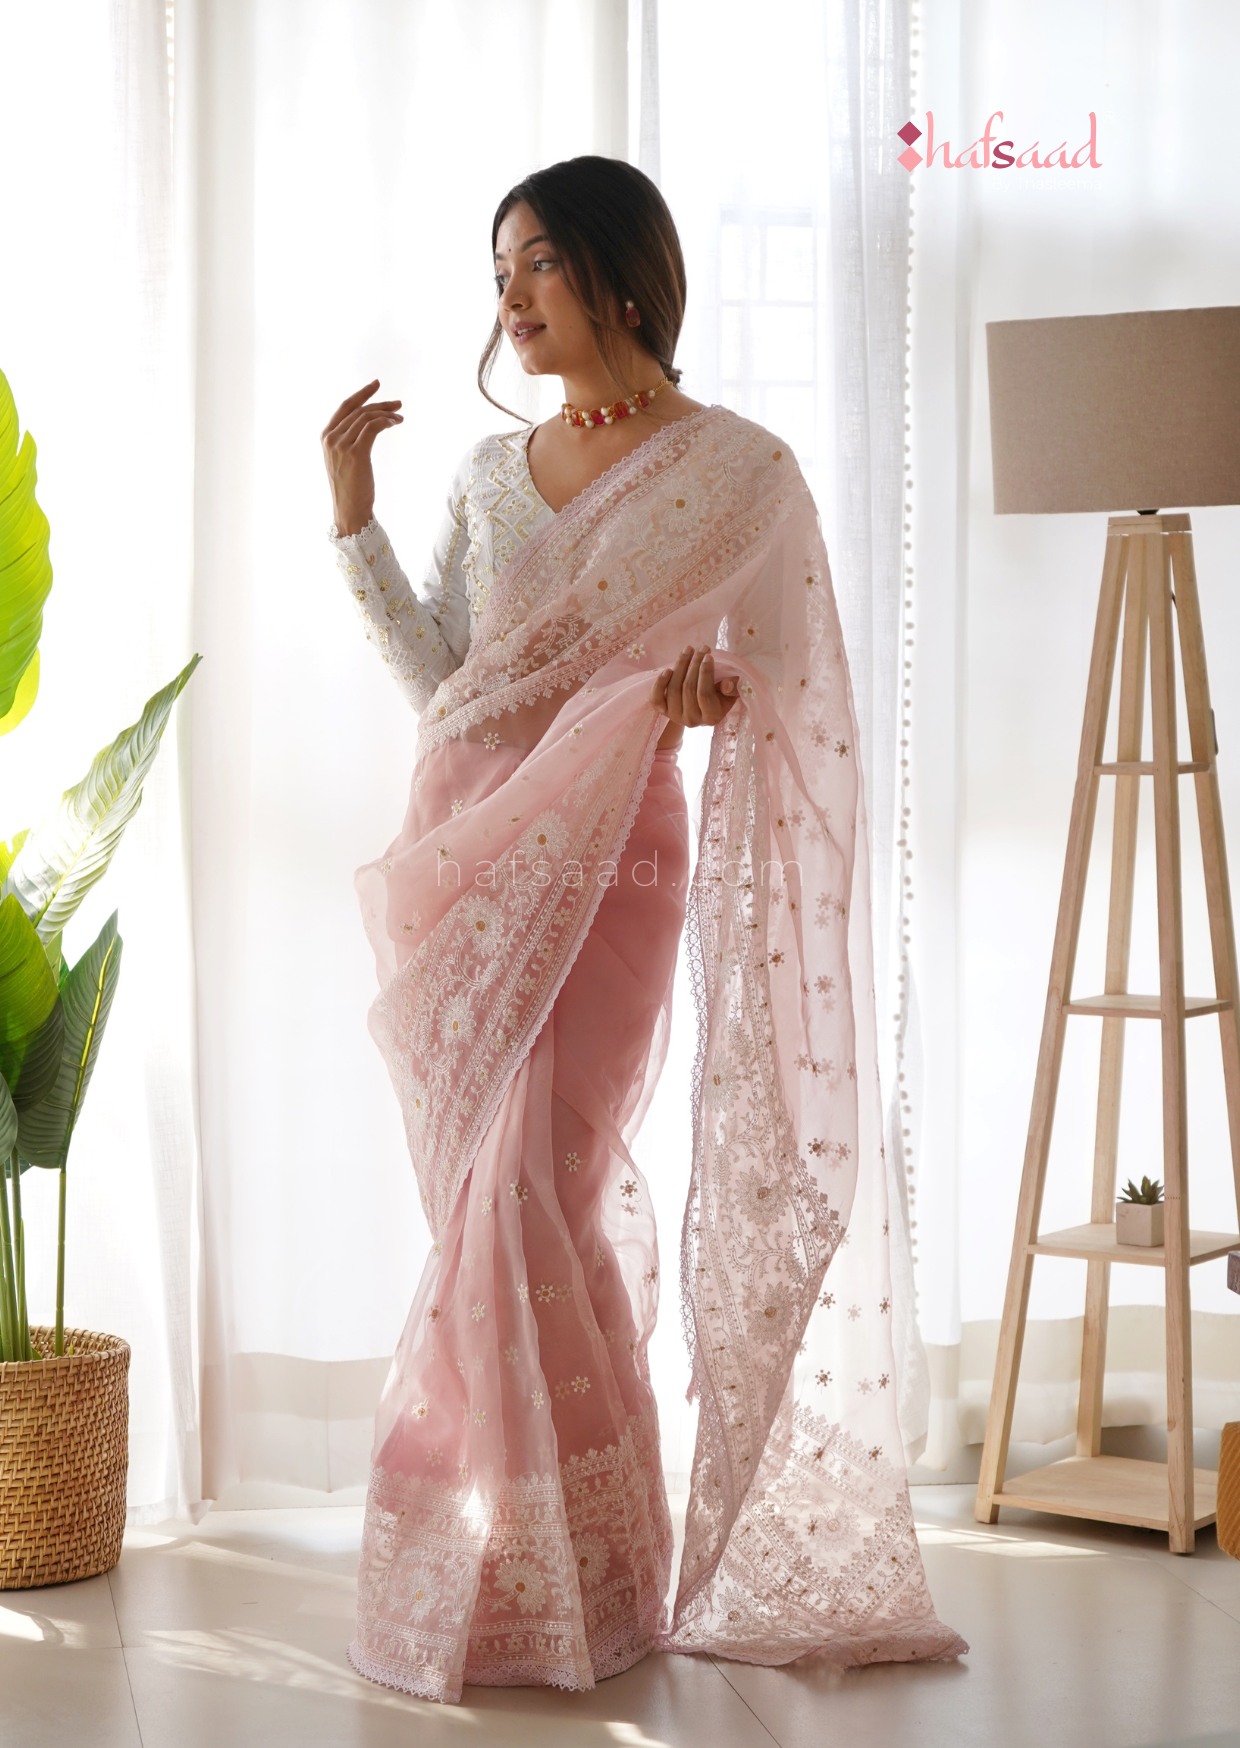 Blushed- Ready to wear saree (Pink)